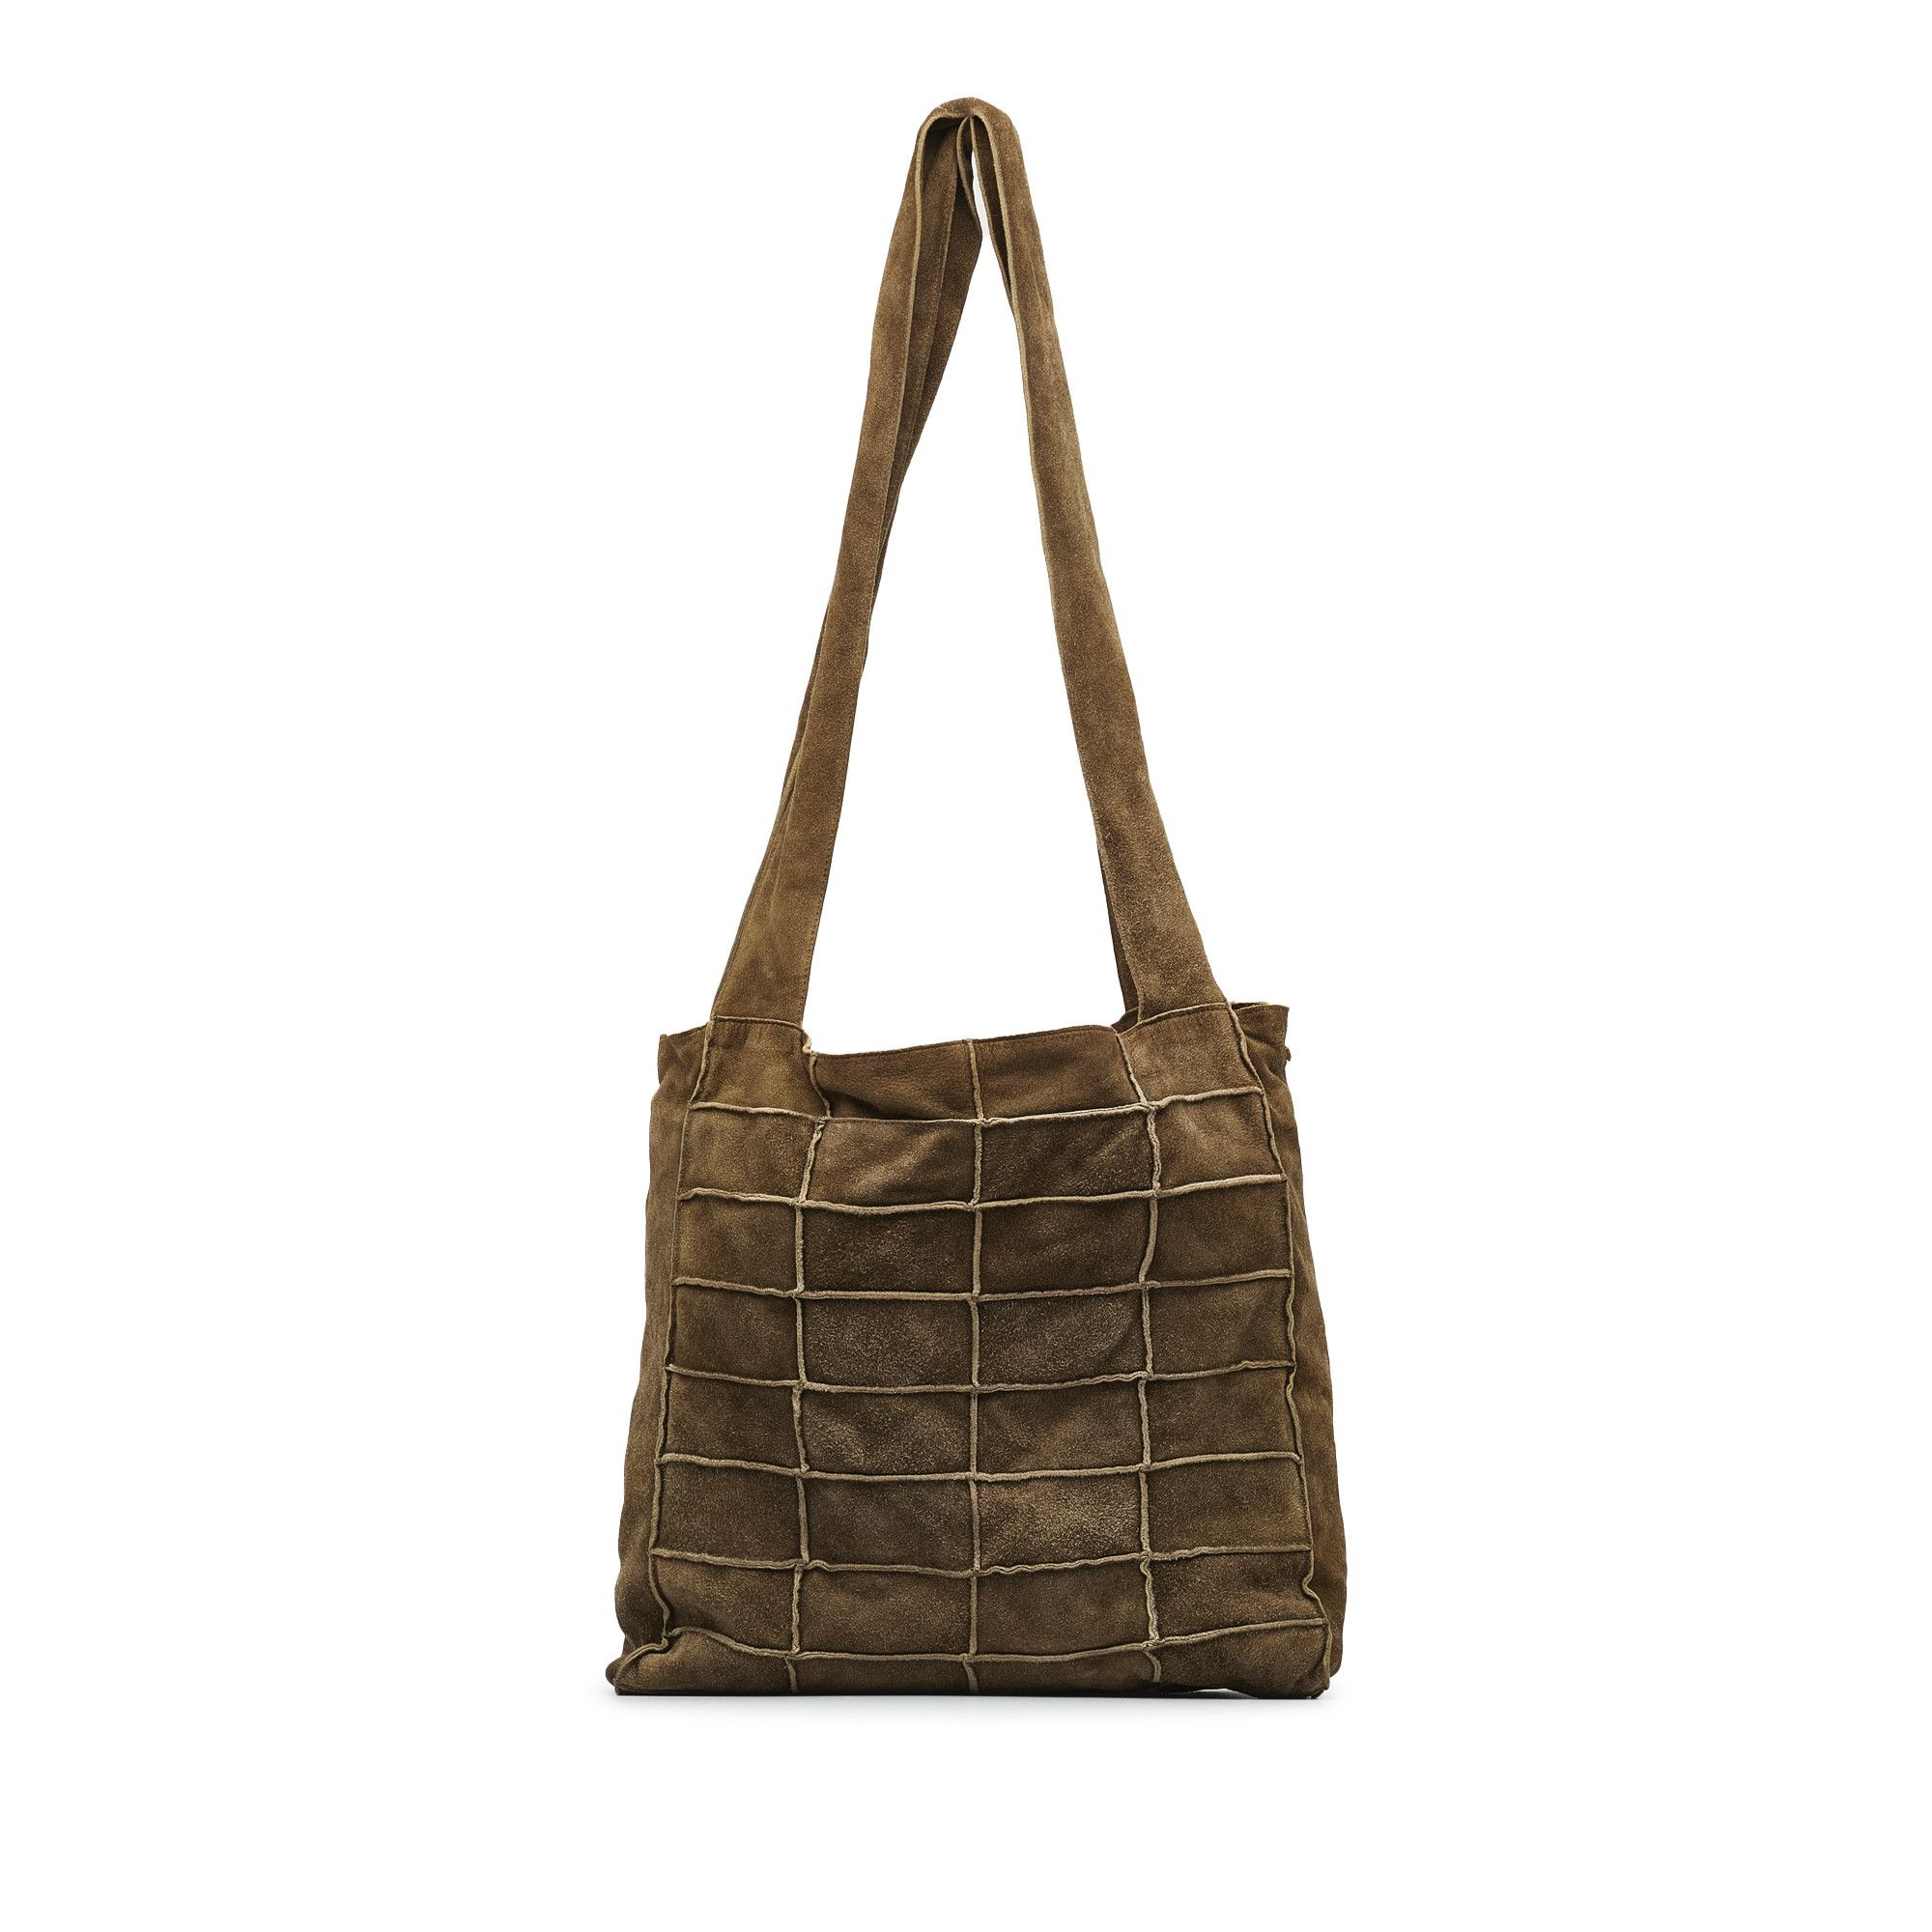 CHANEL Tote Beige Bags & Handbags for Women